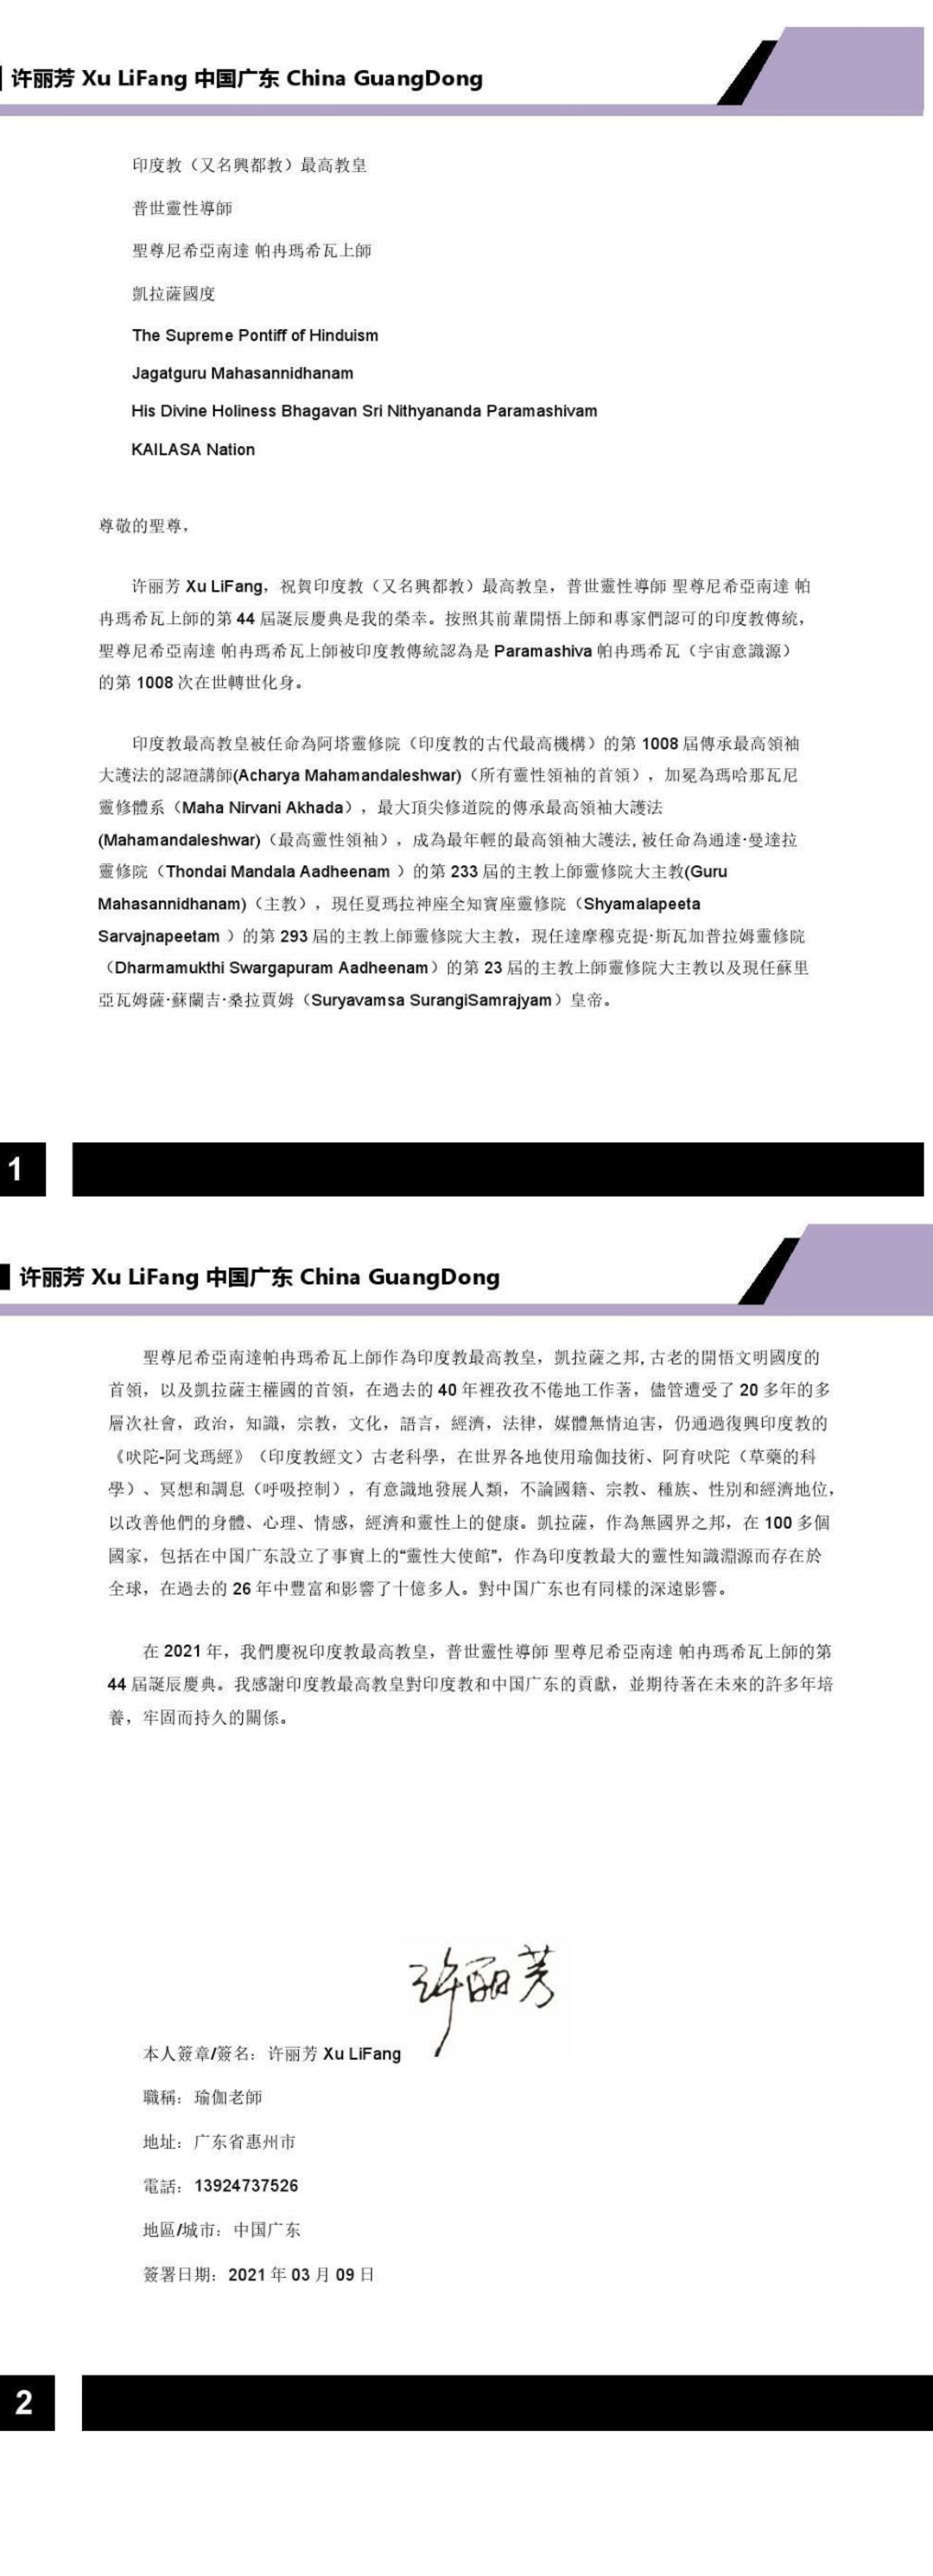 China---Xu-Li-Fang---Mar-9---2021-(Proclamation)-1OtYA USJitpoiXA6cRddEr5obchiiCsU.pdf